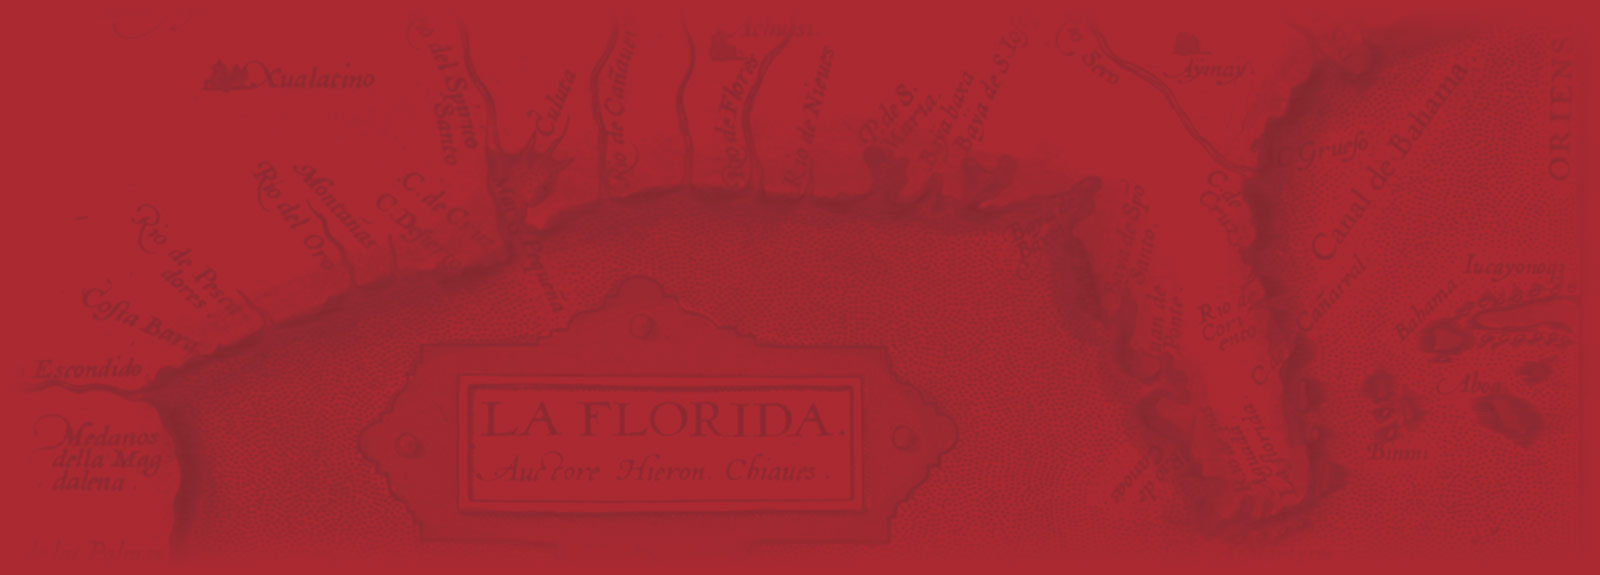 Background image of 18th century Florida map